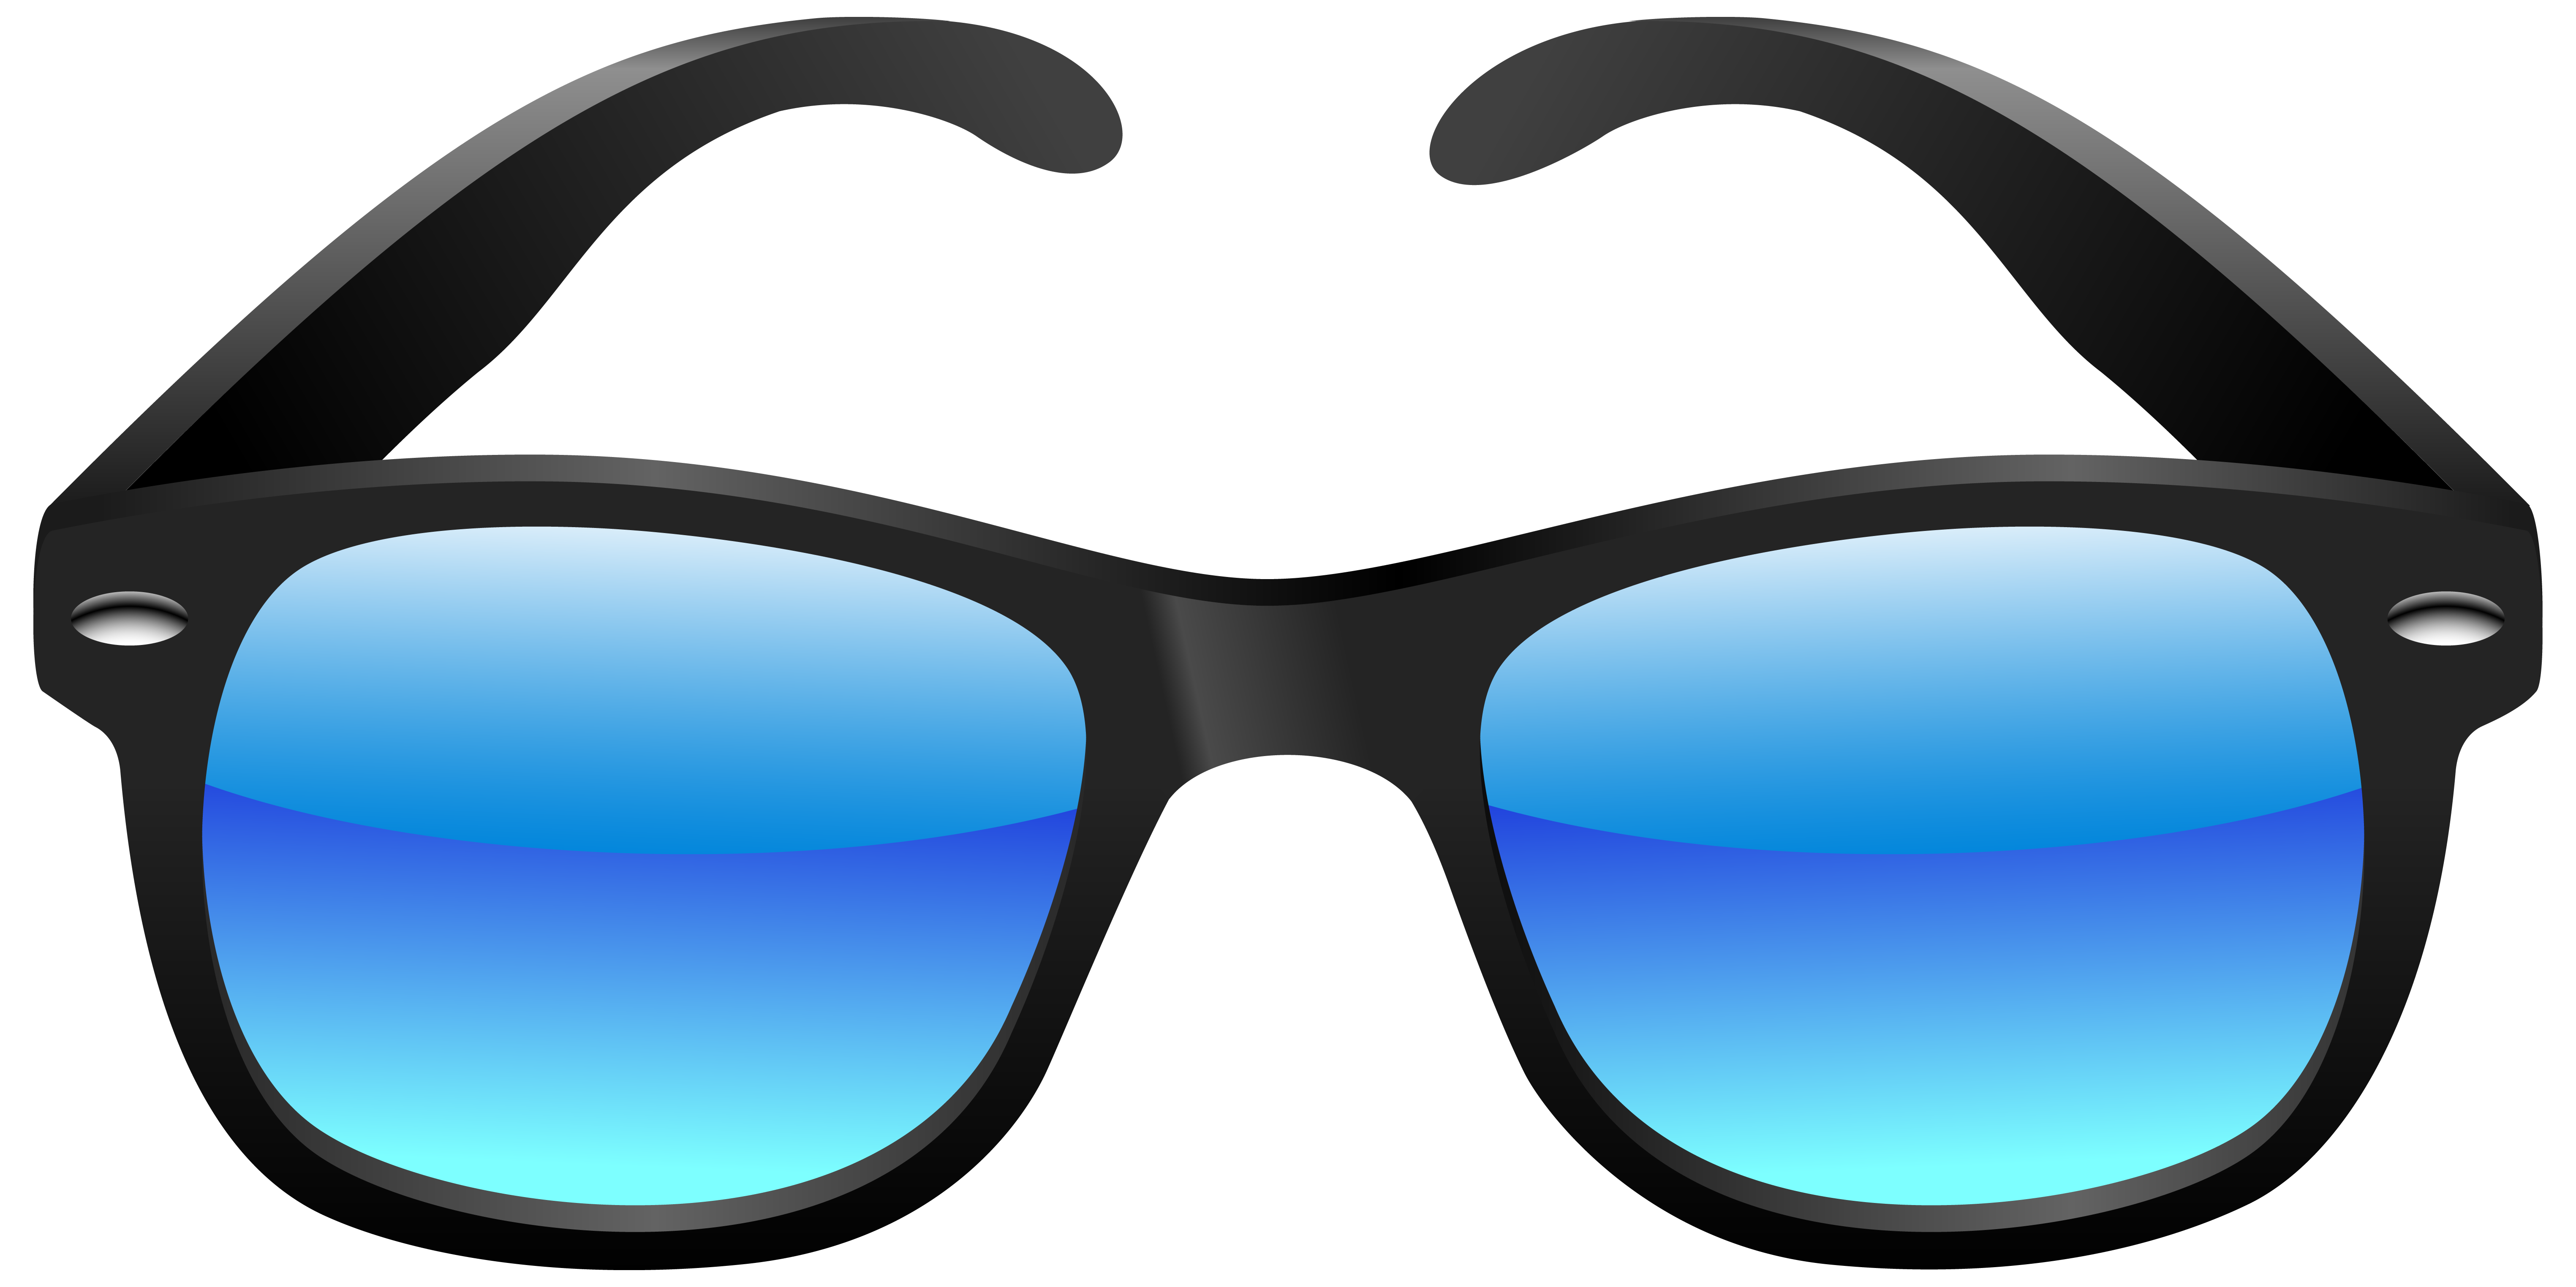 Black and blue sunglasses clipart image - Clipartix